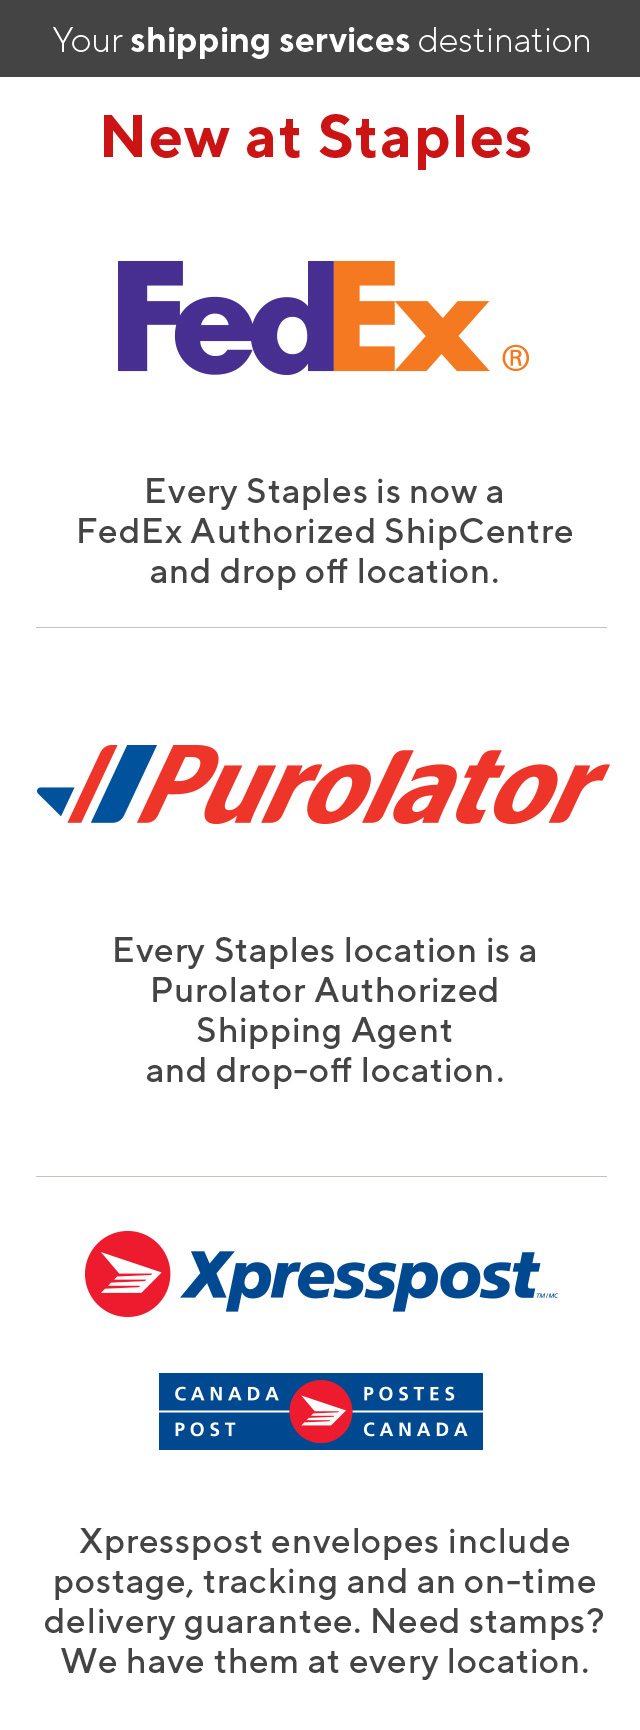 You shipping services destination. New at Staples. FedEX. Purolator. Xpresspost.